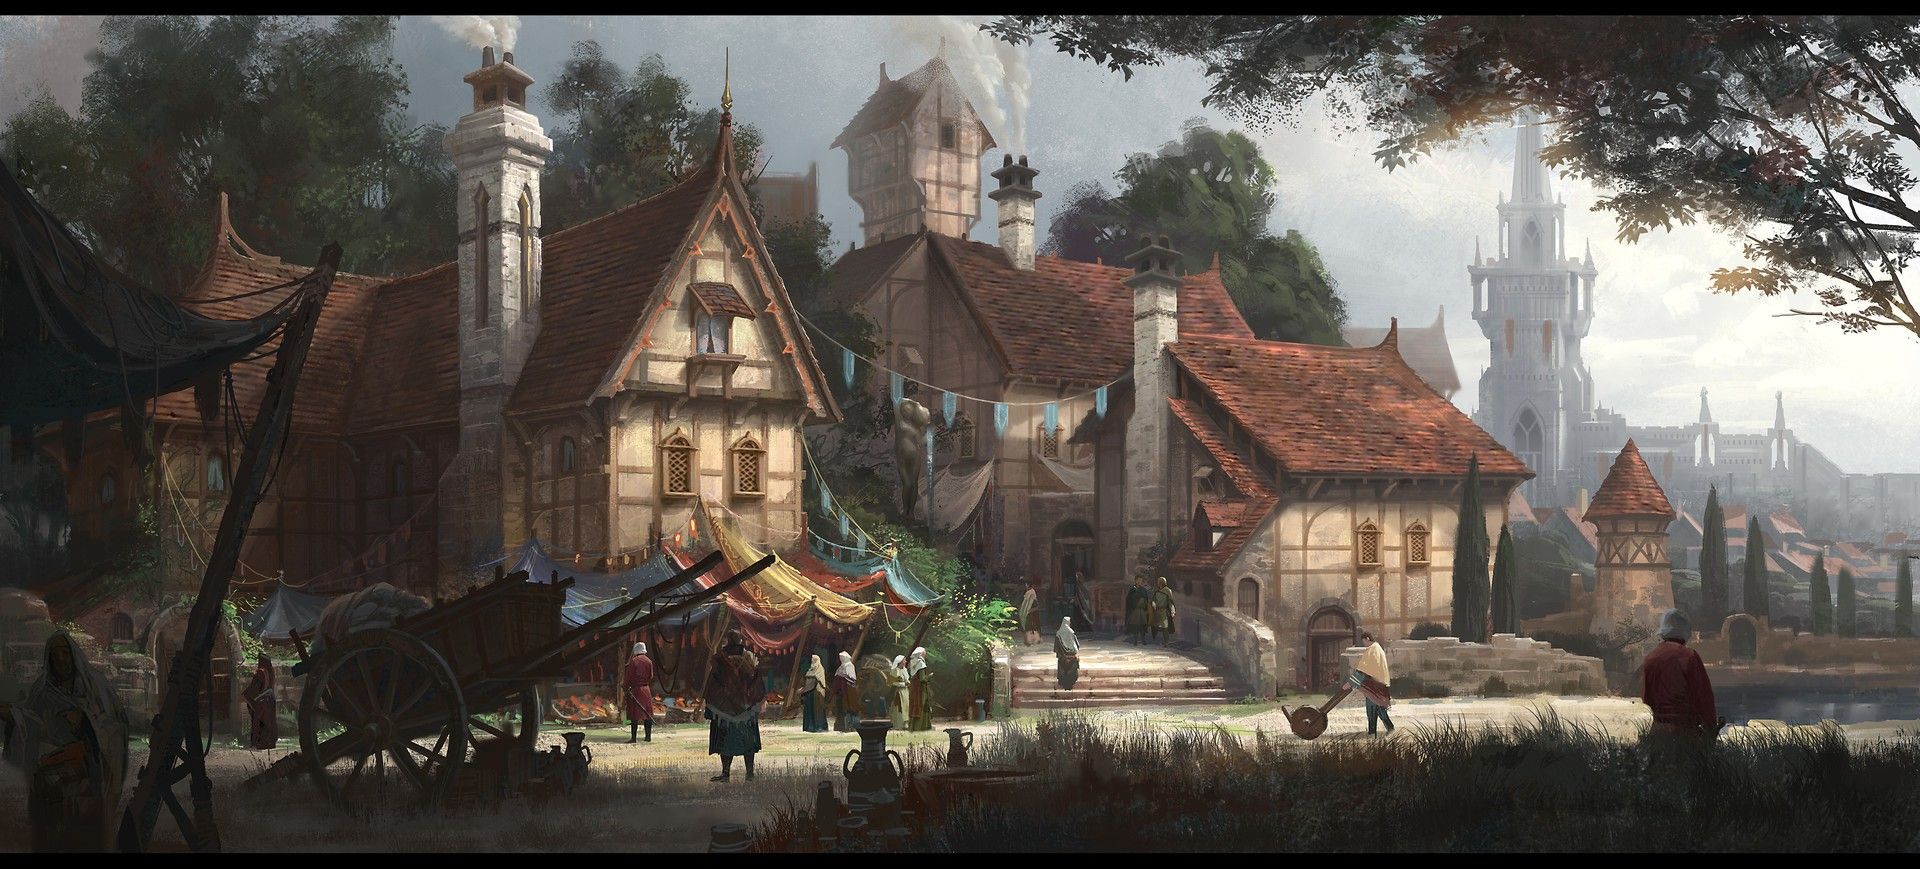 Fantasy Village Wallpaper Free Fantasy Village Background